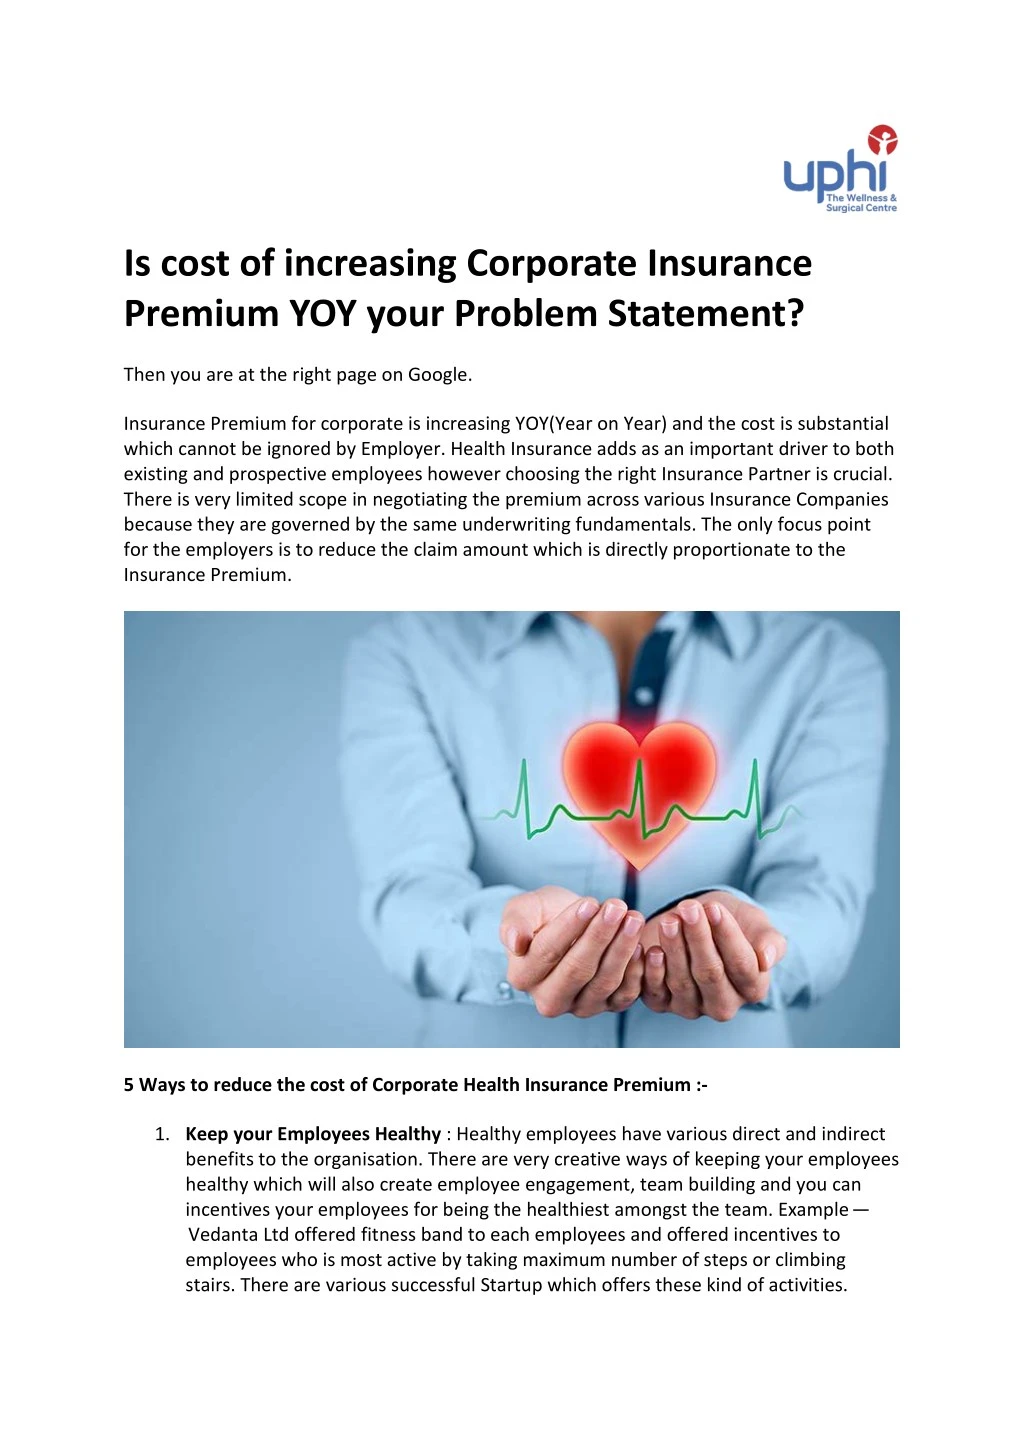 is cost of increasing corporate insurance premium